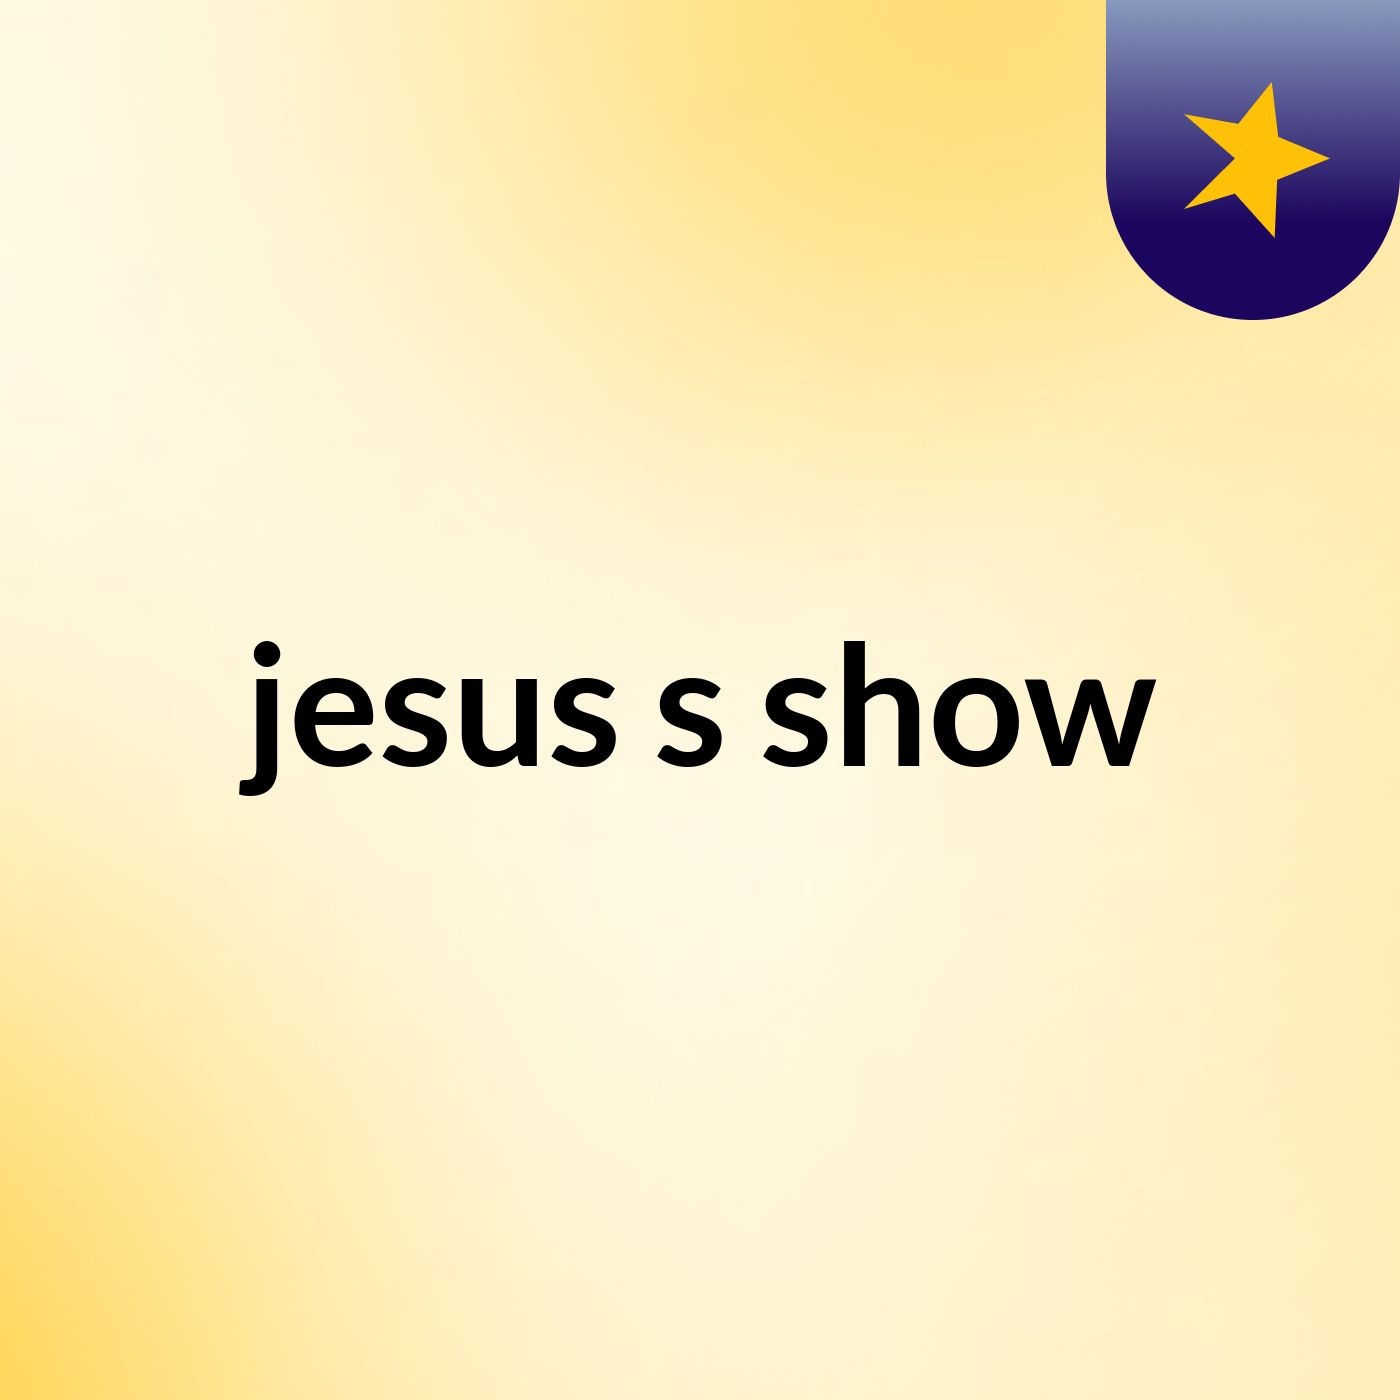 jesus's show